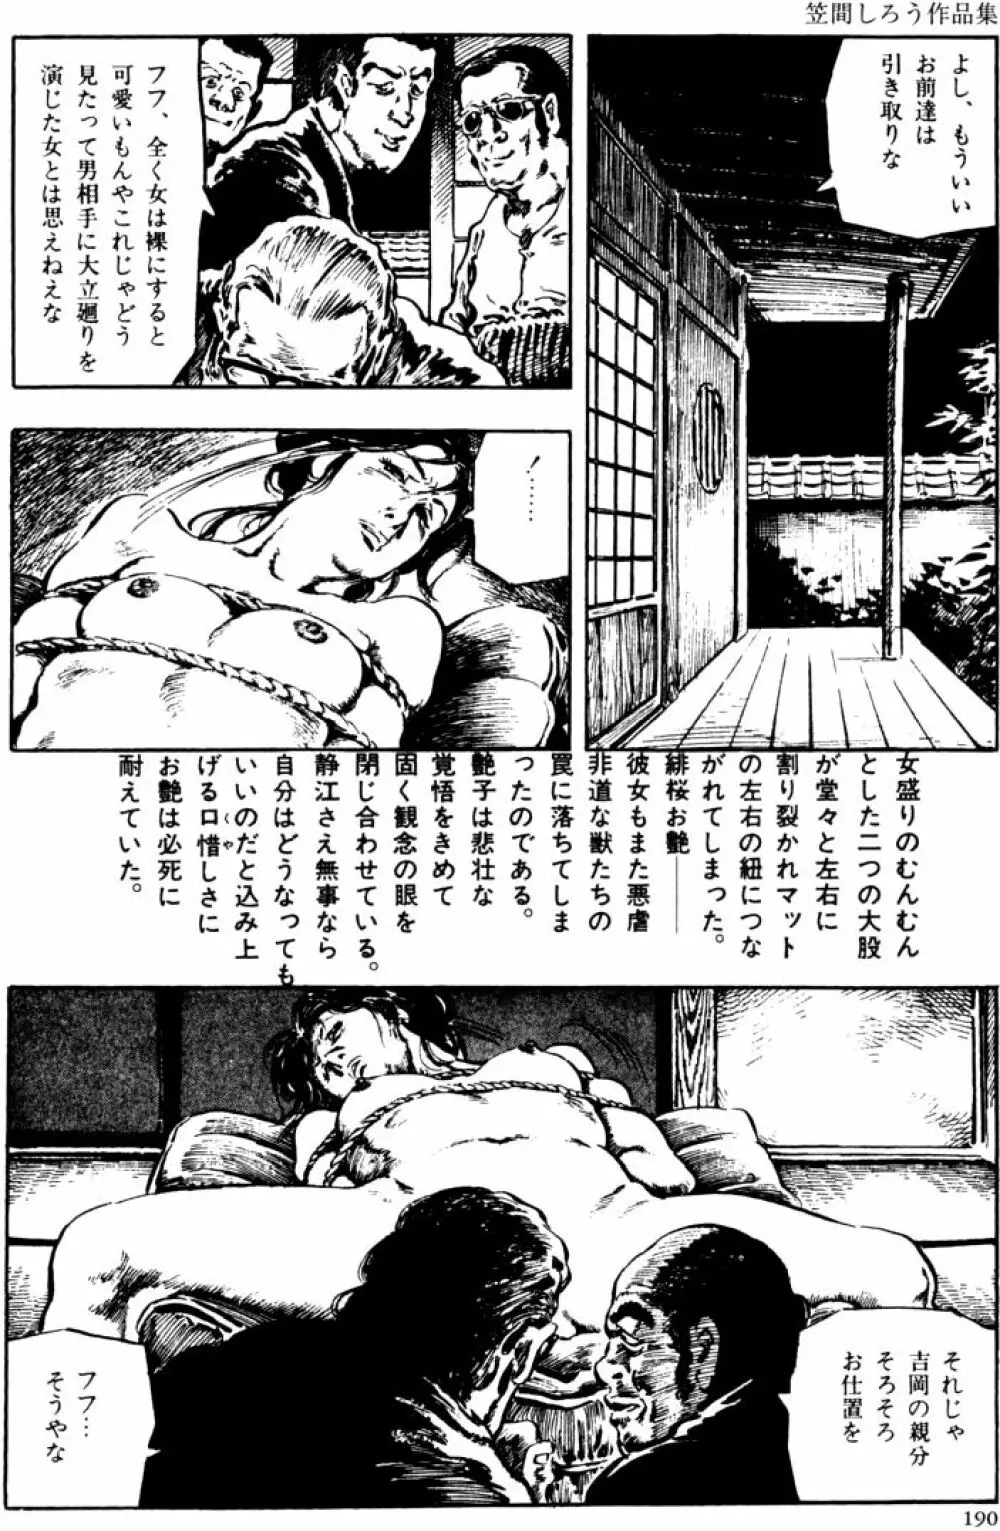 団鬼六原作劇画集成2 159ページ